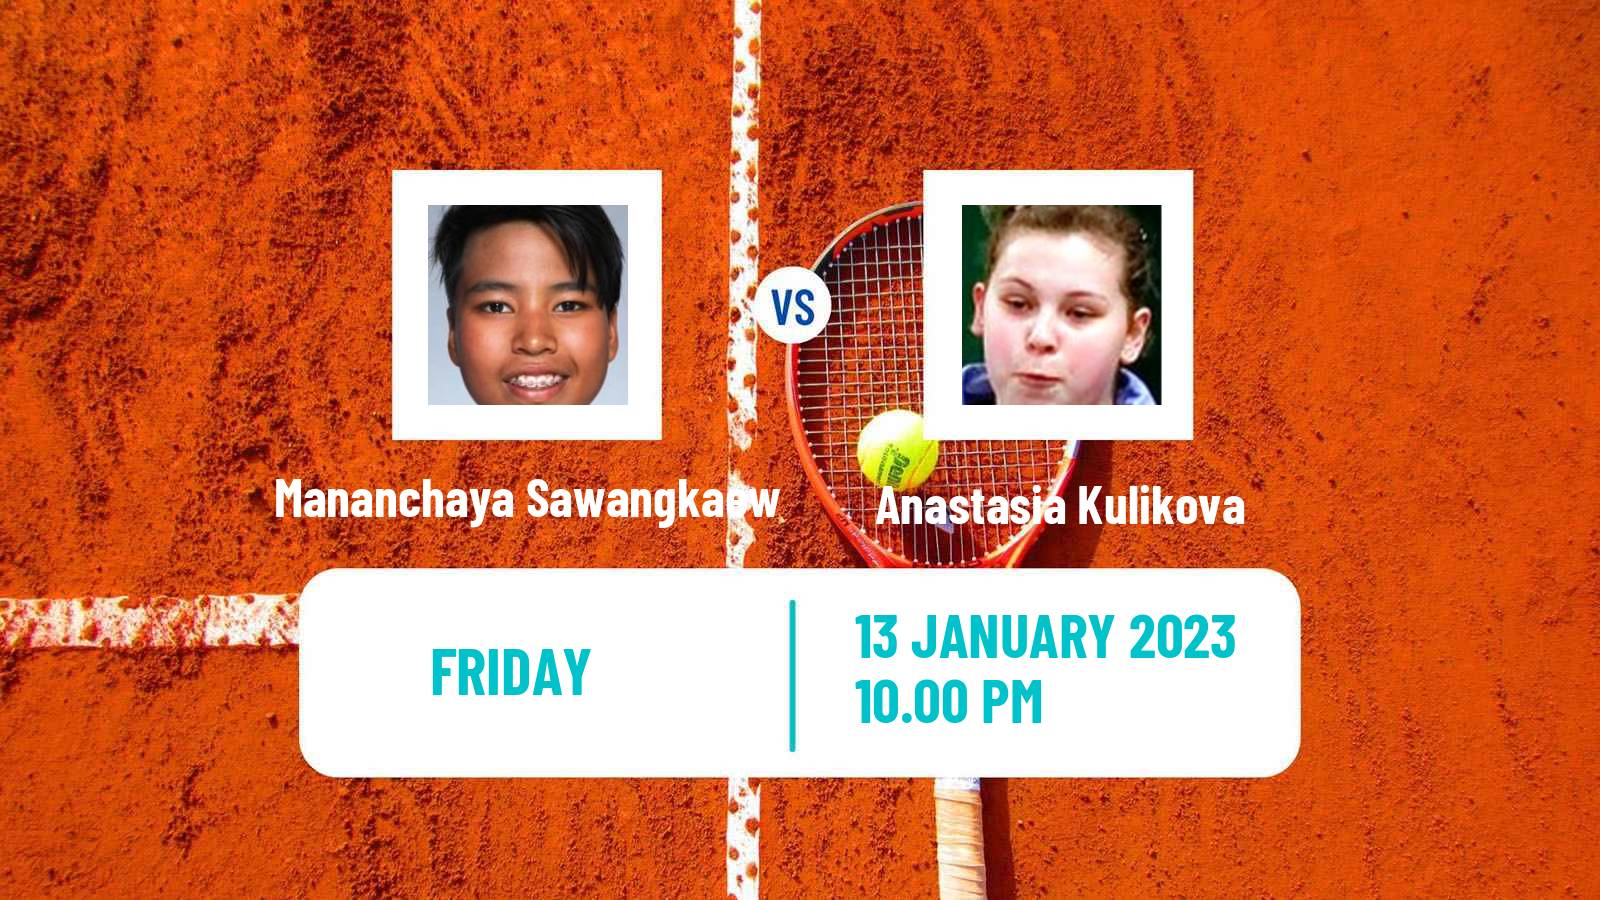 Tennis ITF Tournaments Mananchaya Sawangkaew - Anastasia Kulikova